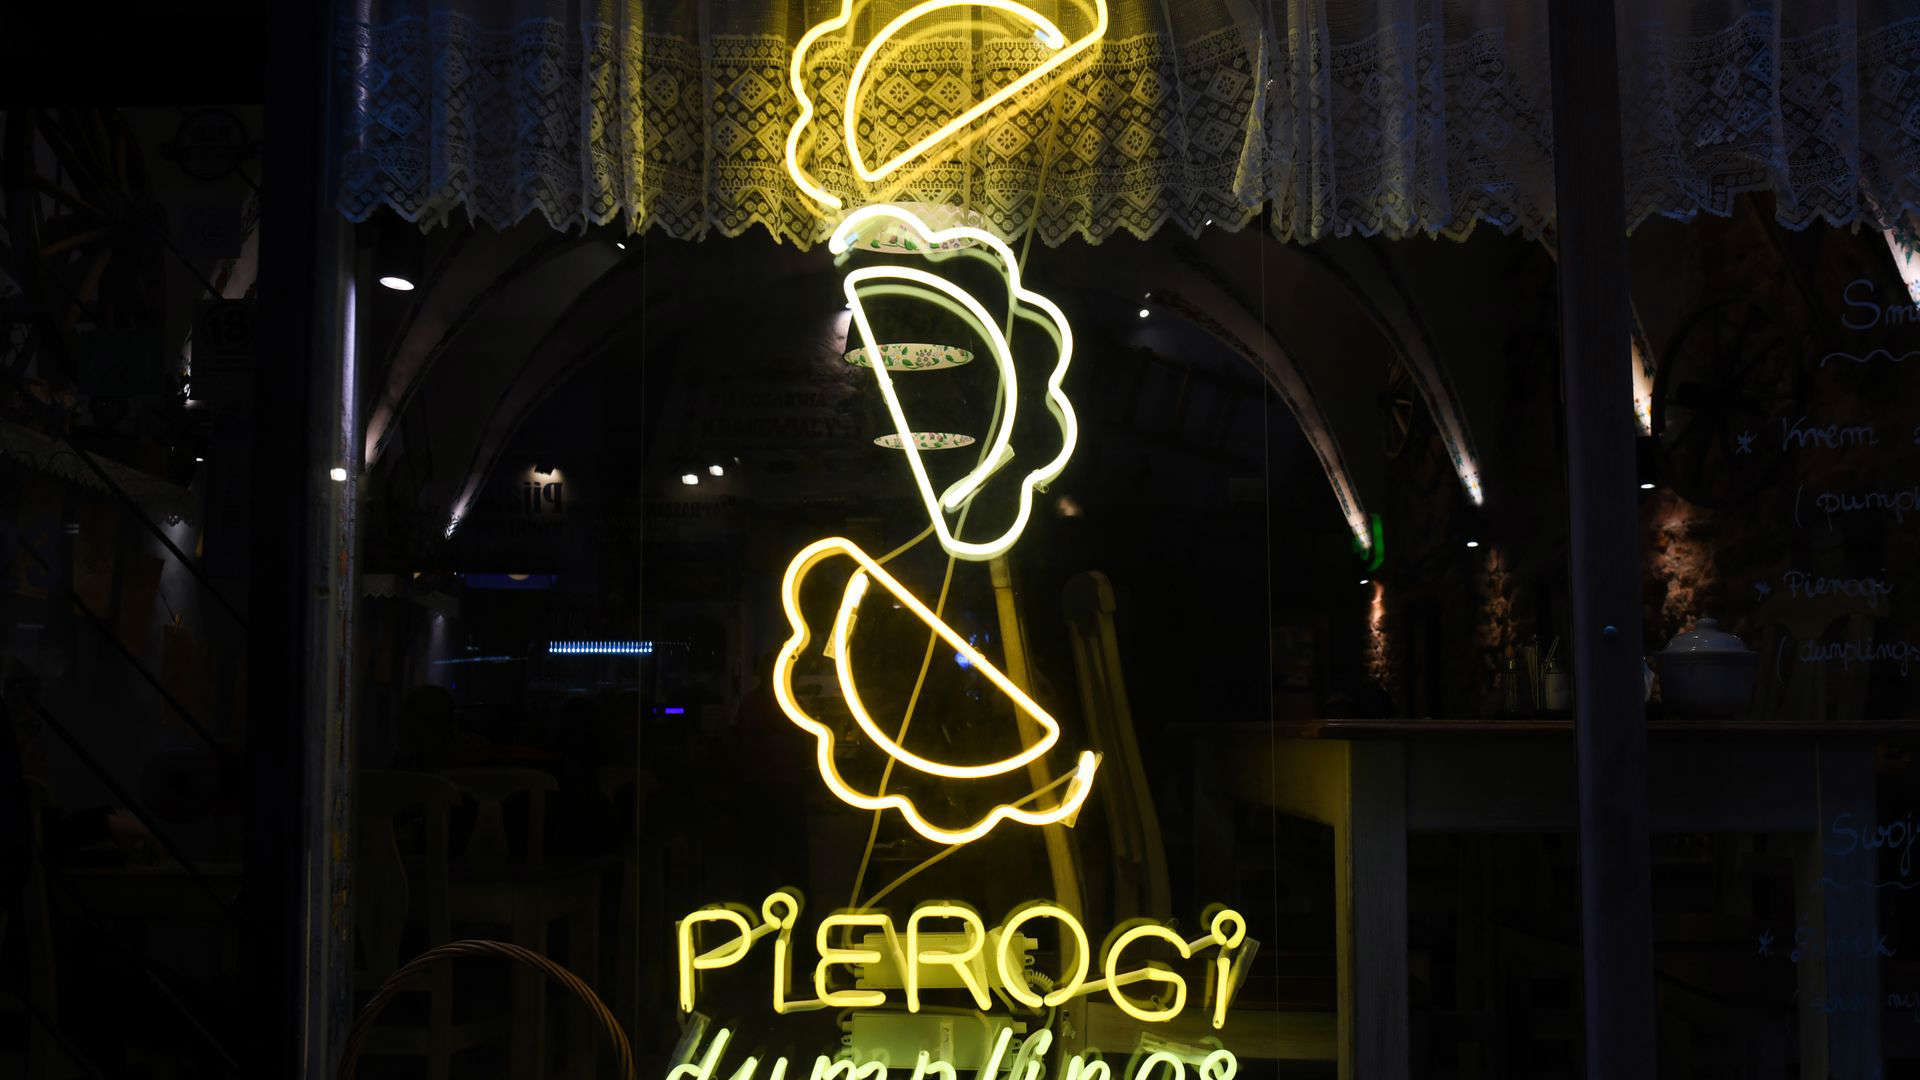 Pierogi_Neon